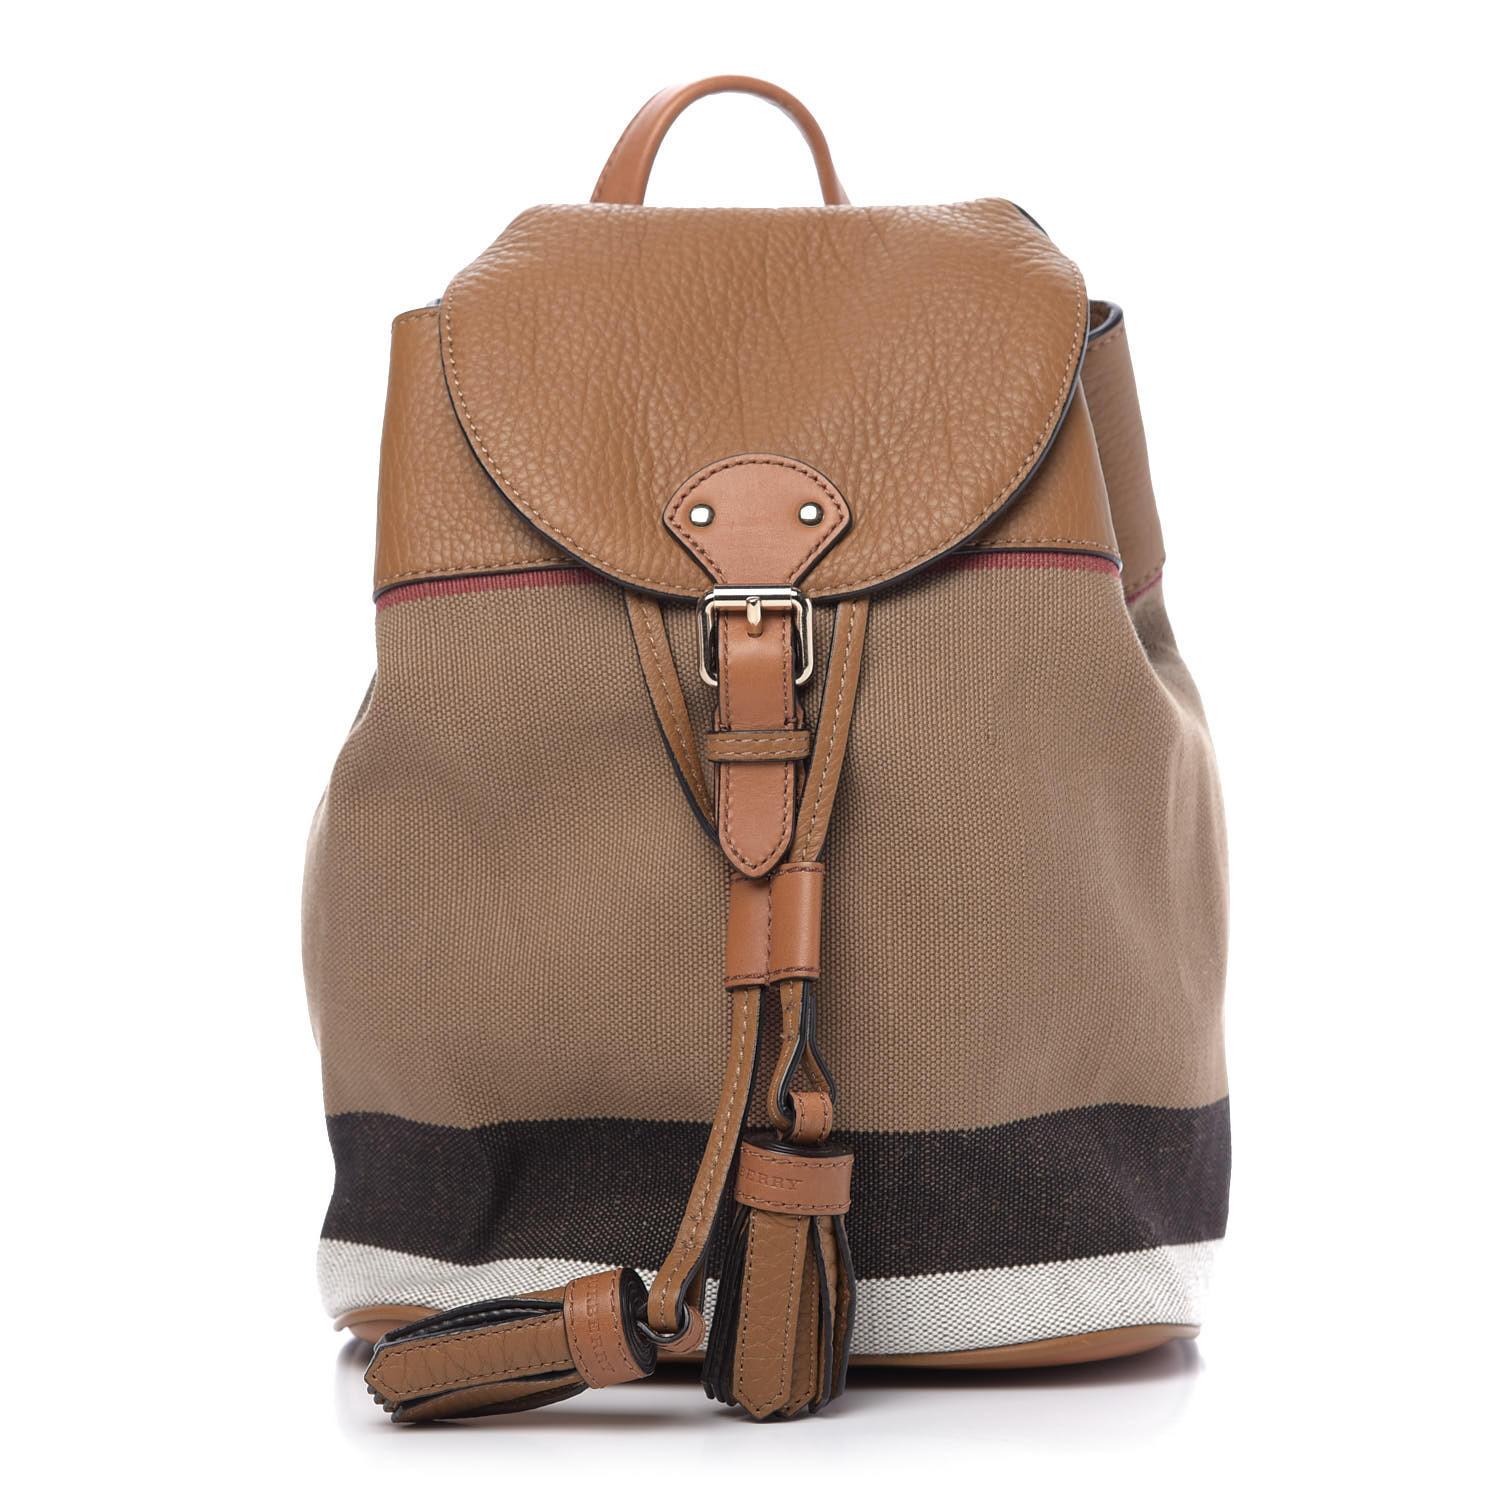 BURBERRY Grainy Calfskin Jute Check Girl's Mini Backpack Sand 695290 FASHIONPHILE